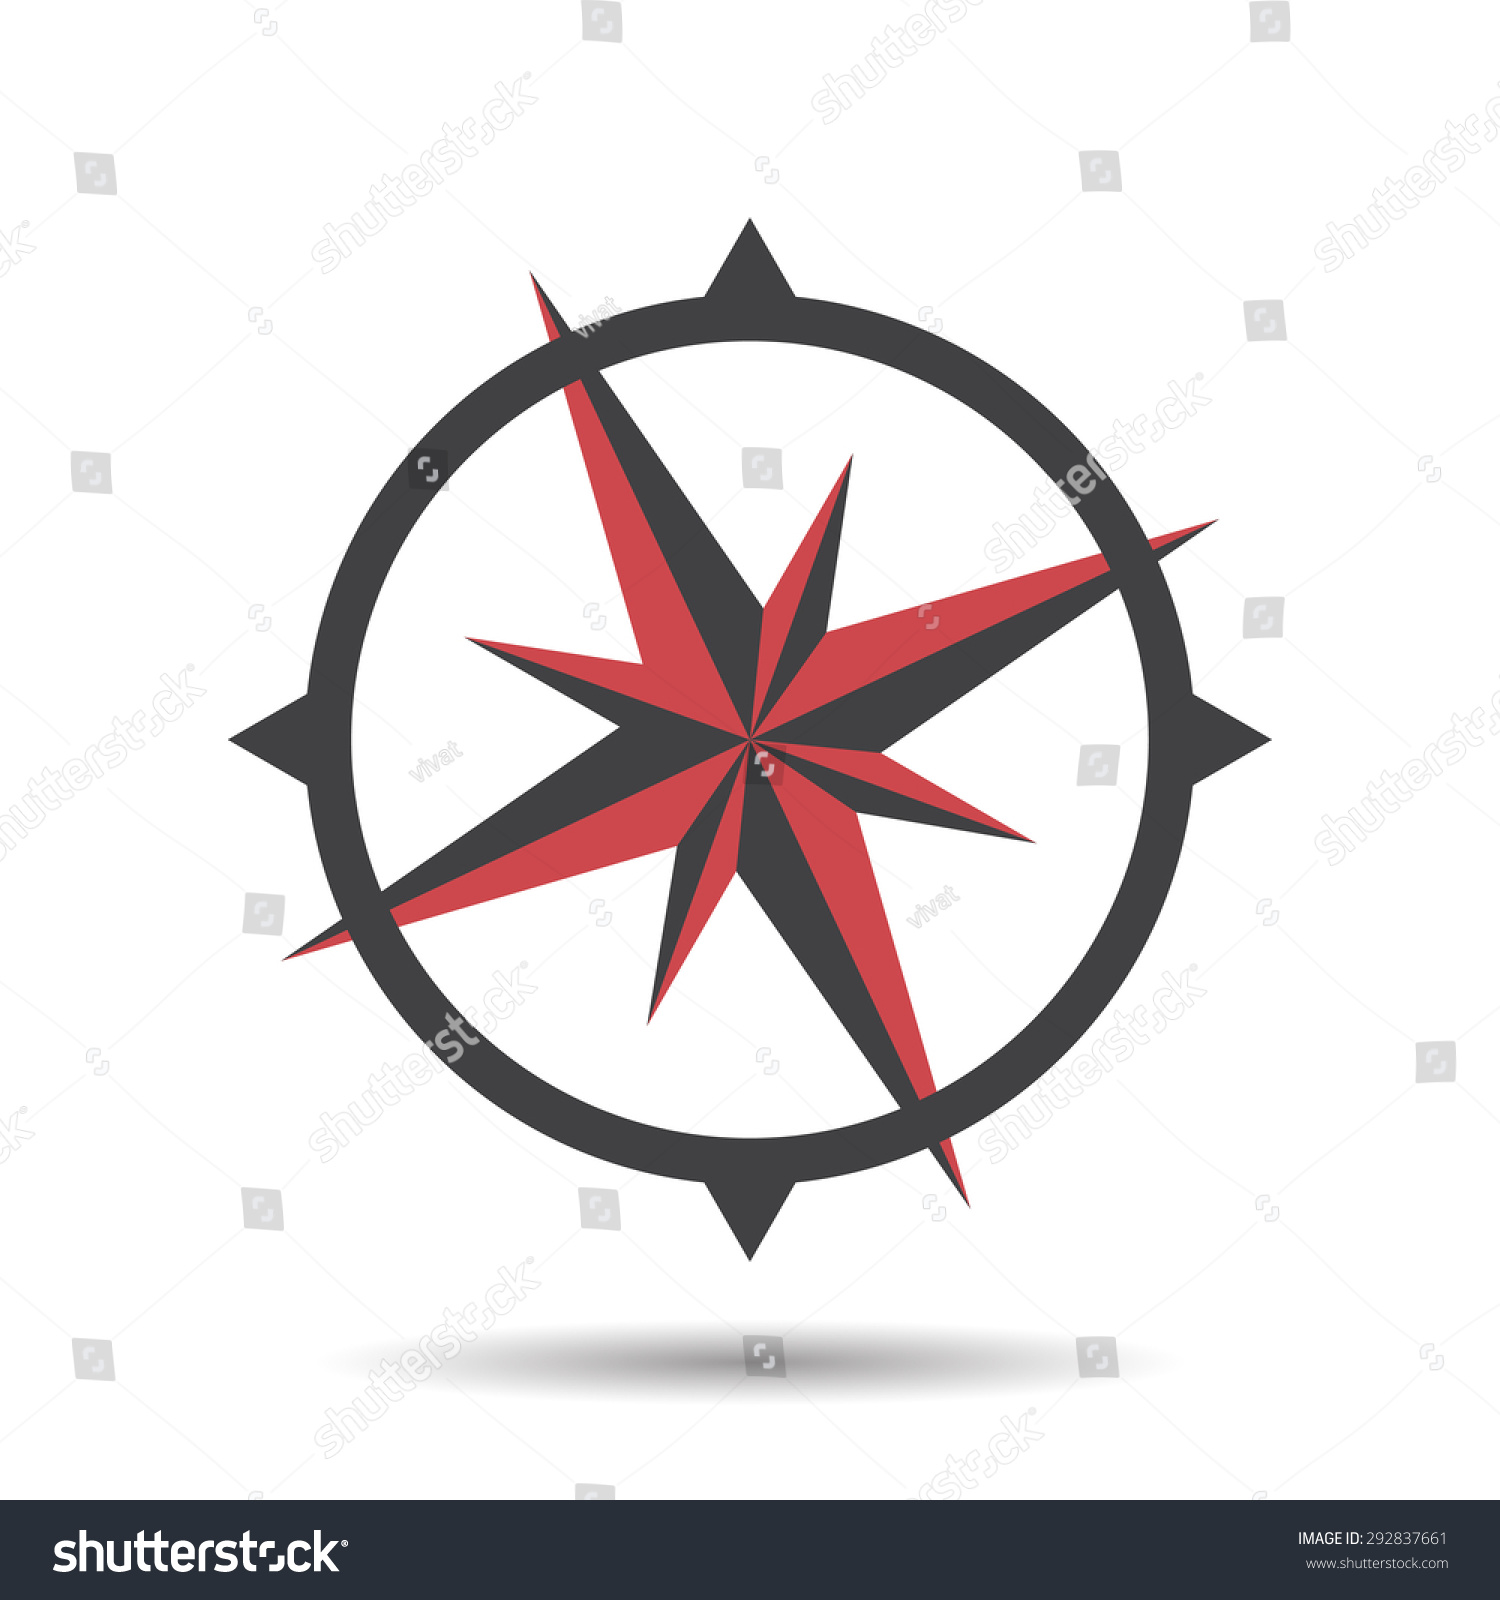 Icon Compass Illustration Stock Illustration 292837661 - Shutterstock